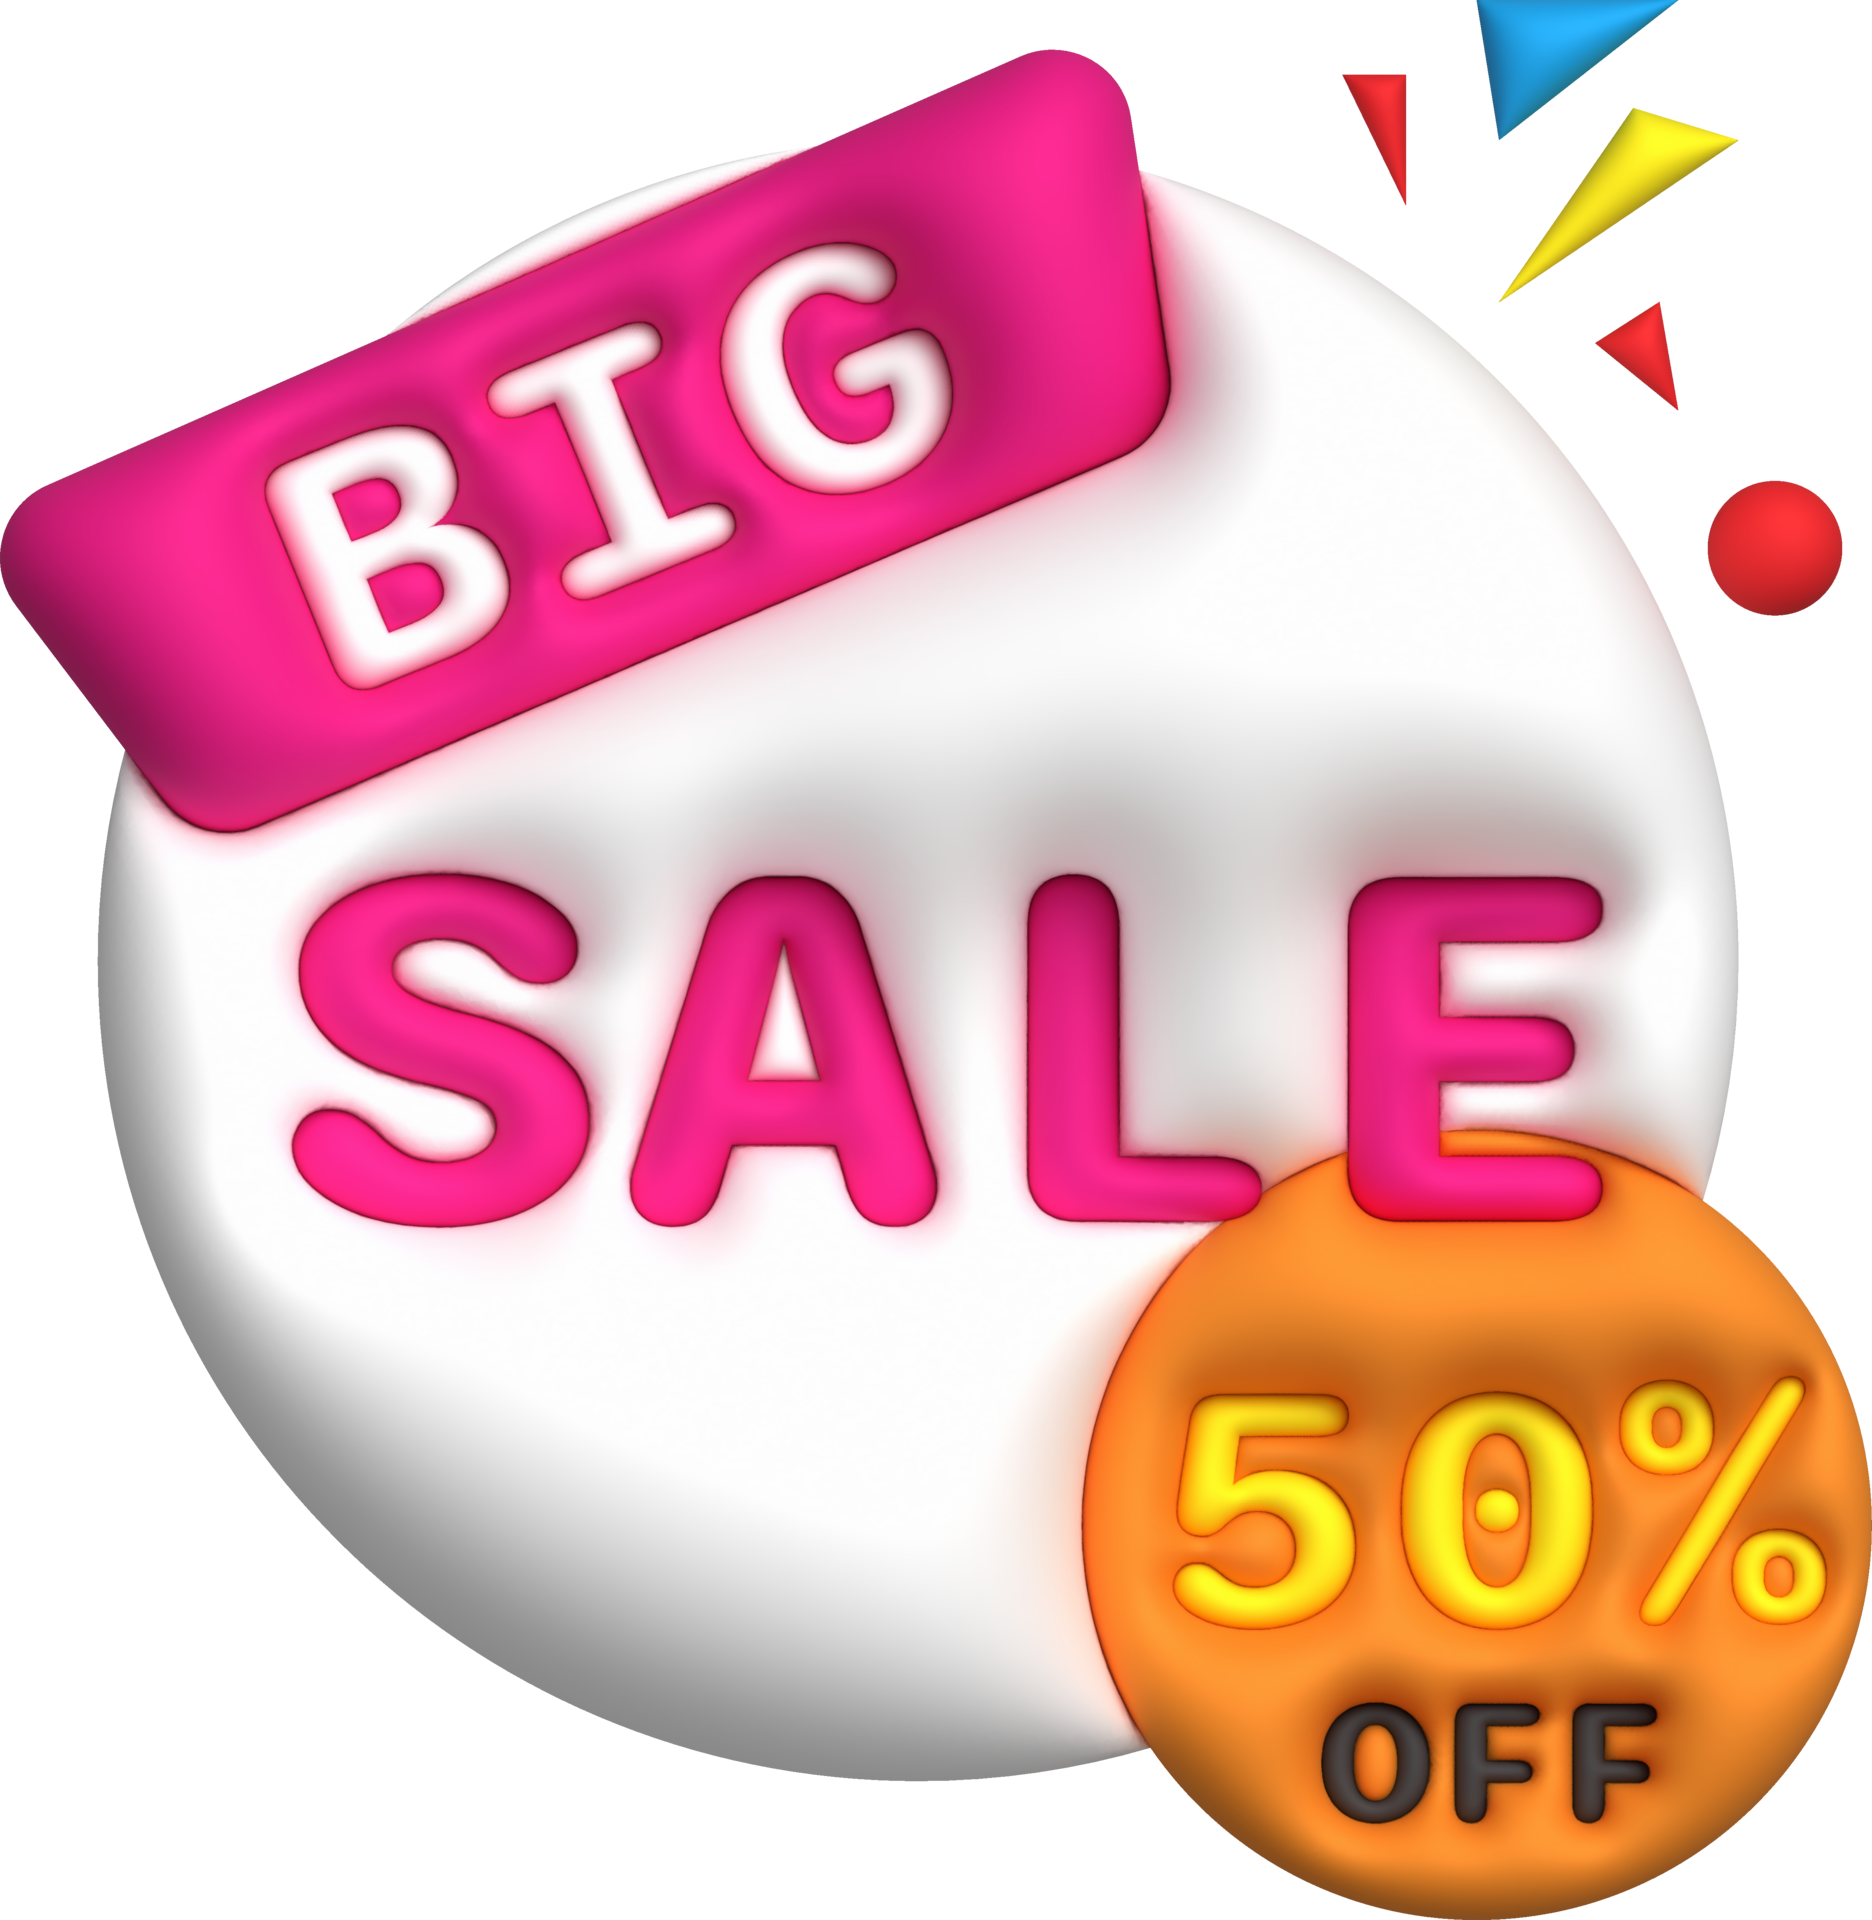 Sale Banner Designshopping Deal Offer Discountbig Sale 50 Percentage Off3d Illustration